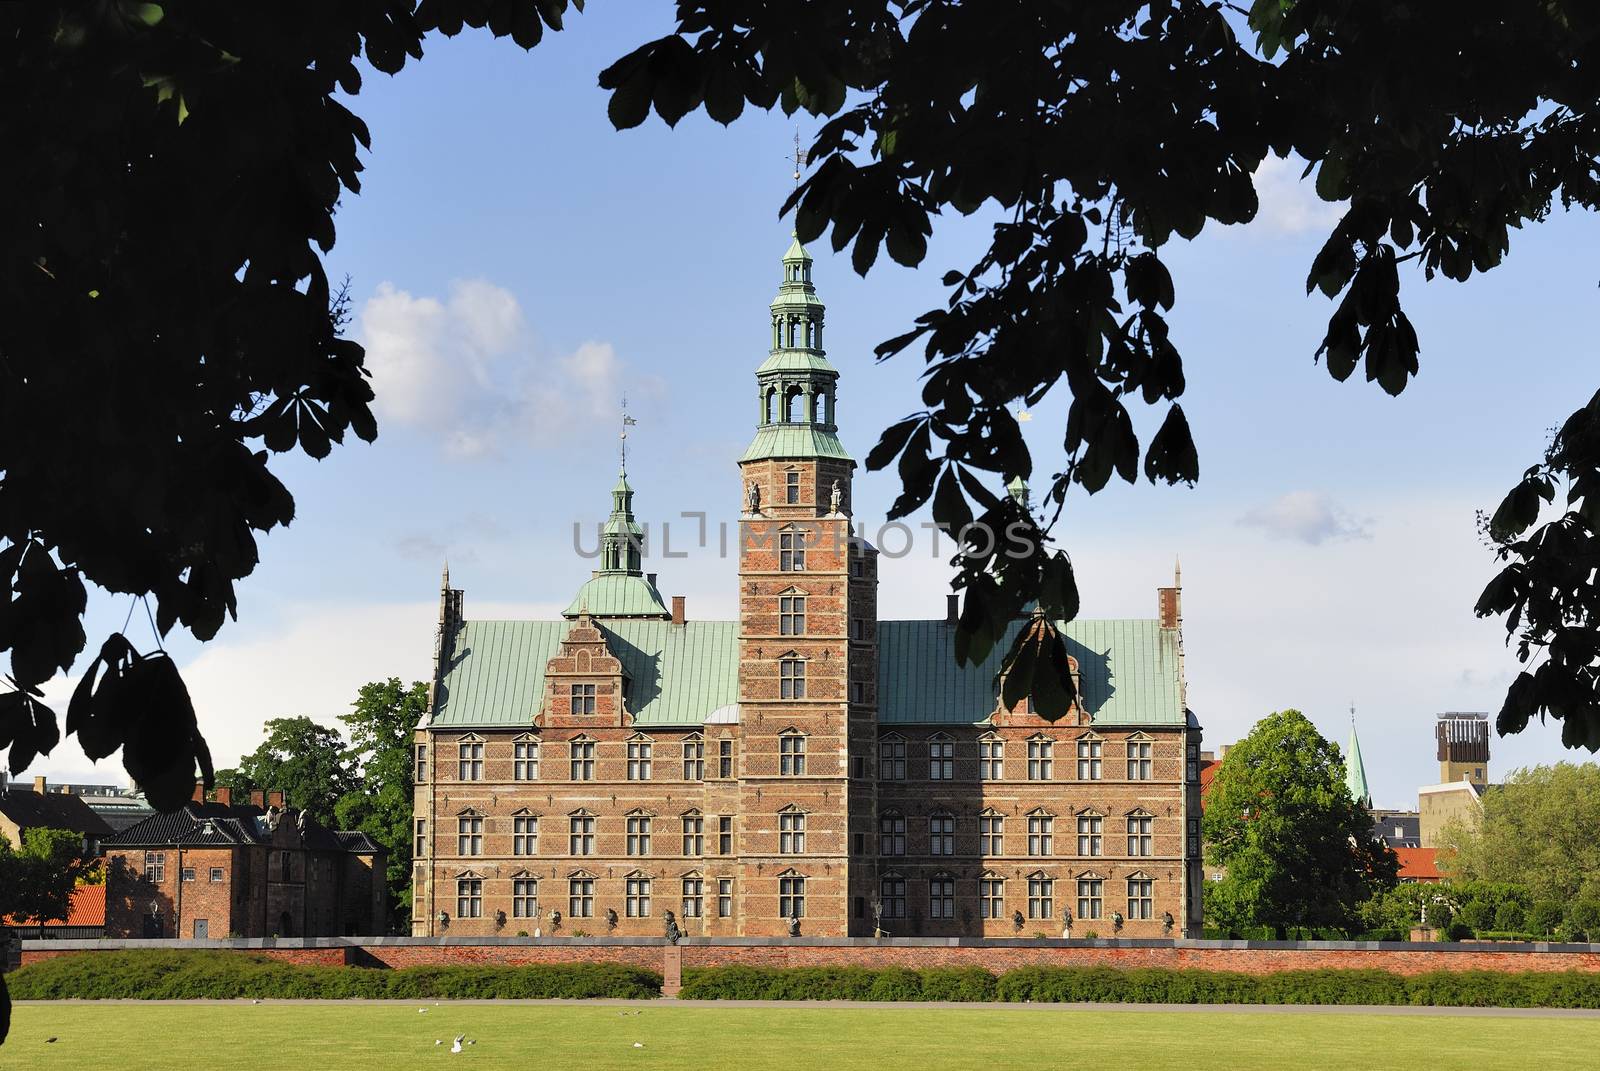 Copenhagen - Rosenborg Castle by a40757